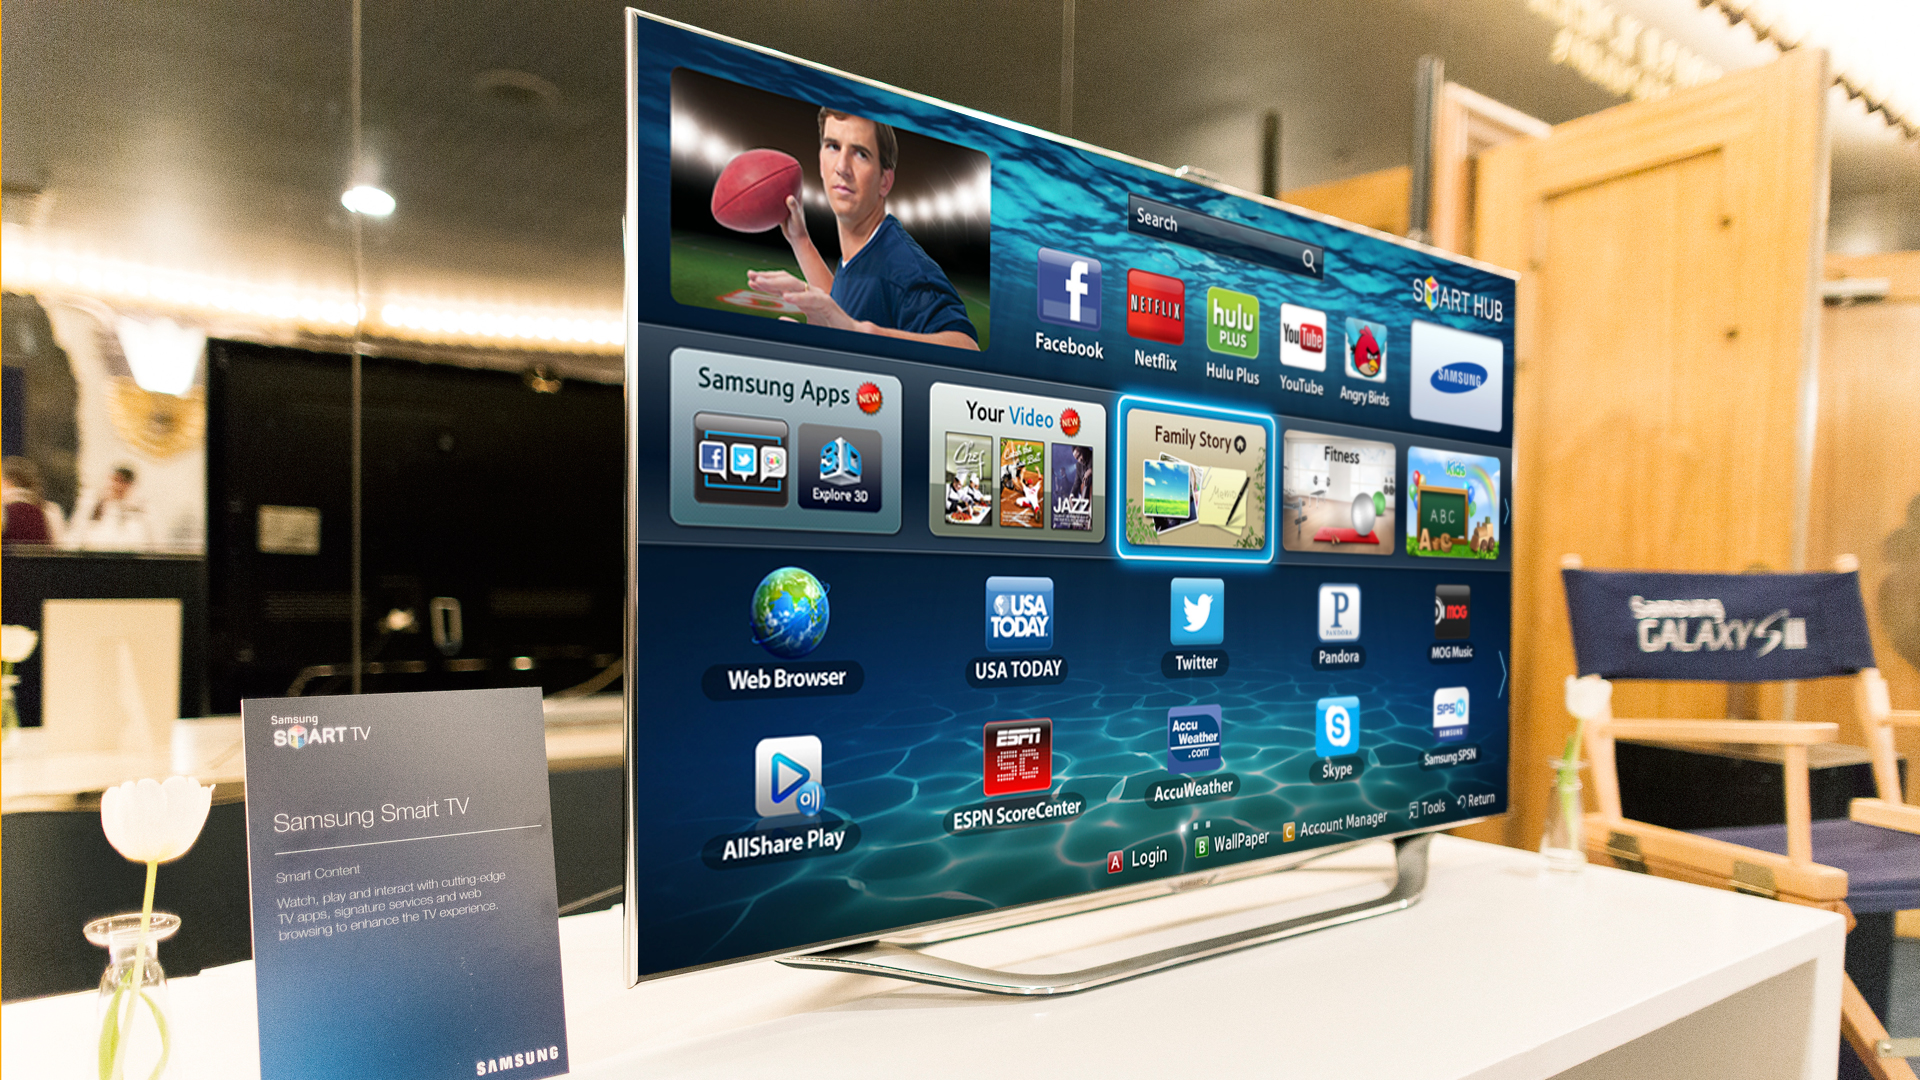 Телевизор зал смарт. Samsung телевизор Smart TV 2013. Телевизор самсунг смарт ТВ. Samsung 2013 телевизоры смарт. Samsung Smart TV с650.